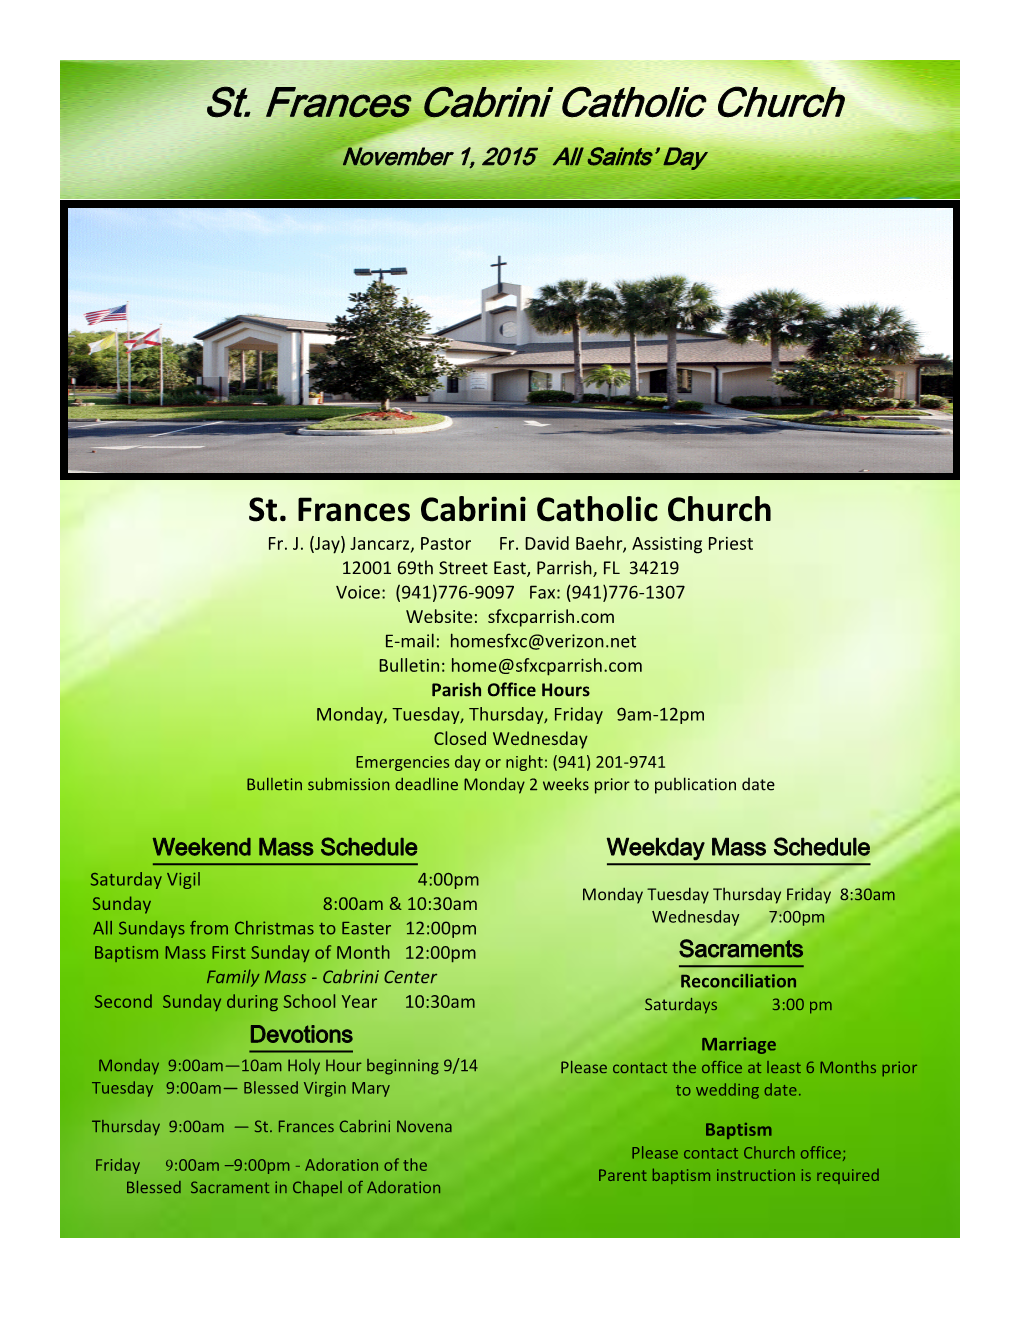 St. Frances Cabrini Catholic Church November 1, 2015 All Saints’ Day